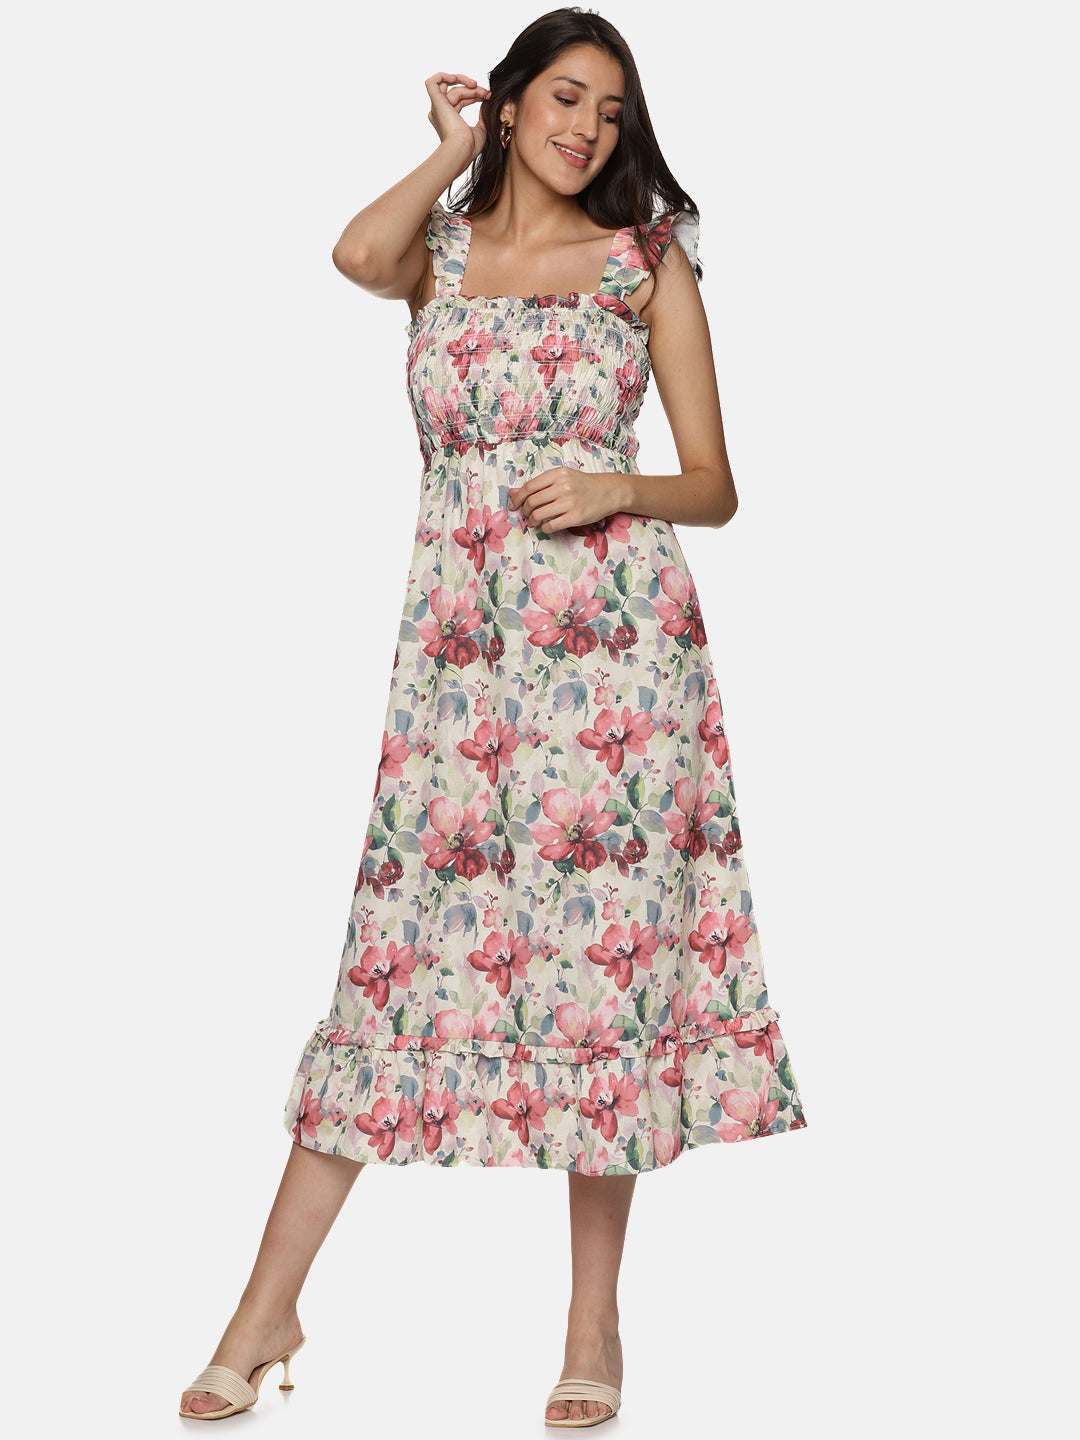 IS.U Floral Multicolor Smocking Detail Midaxi Dress